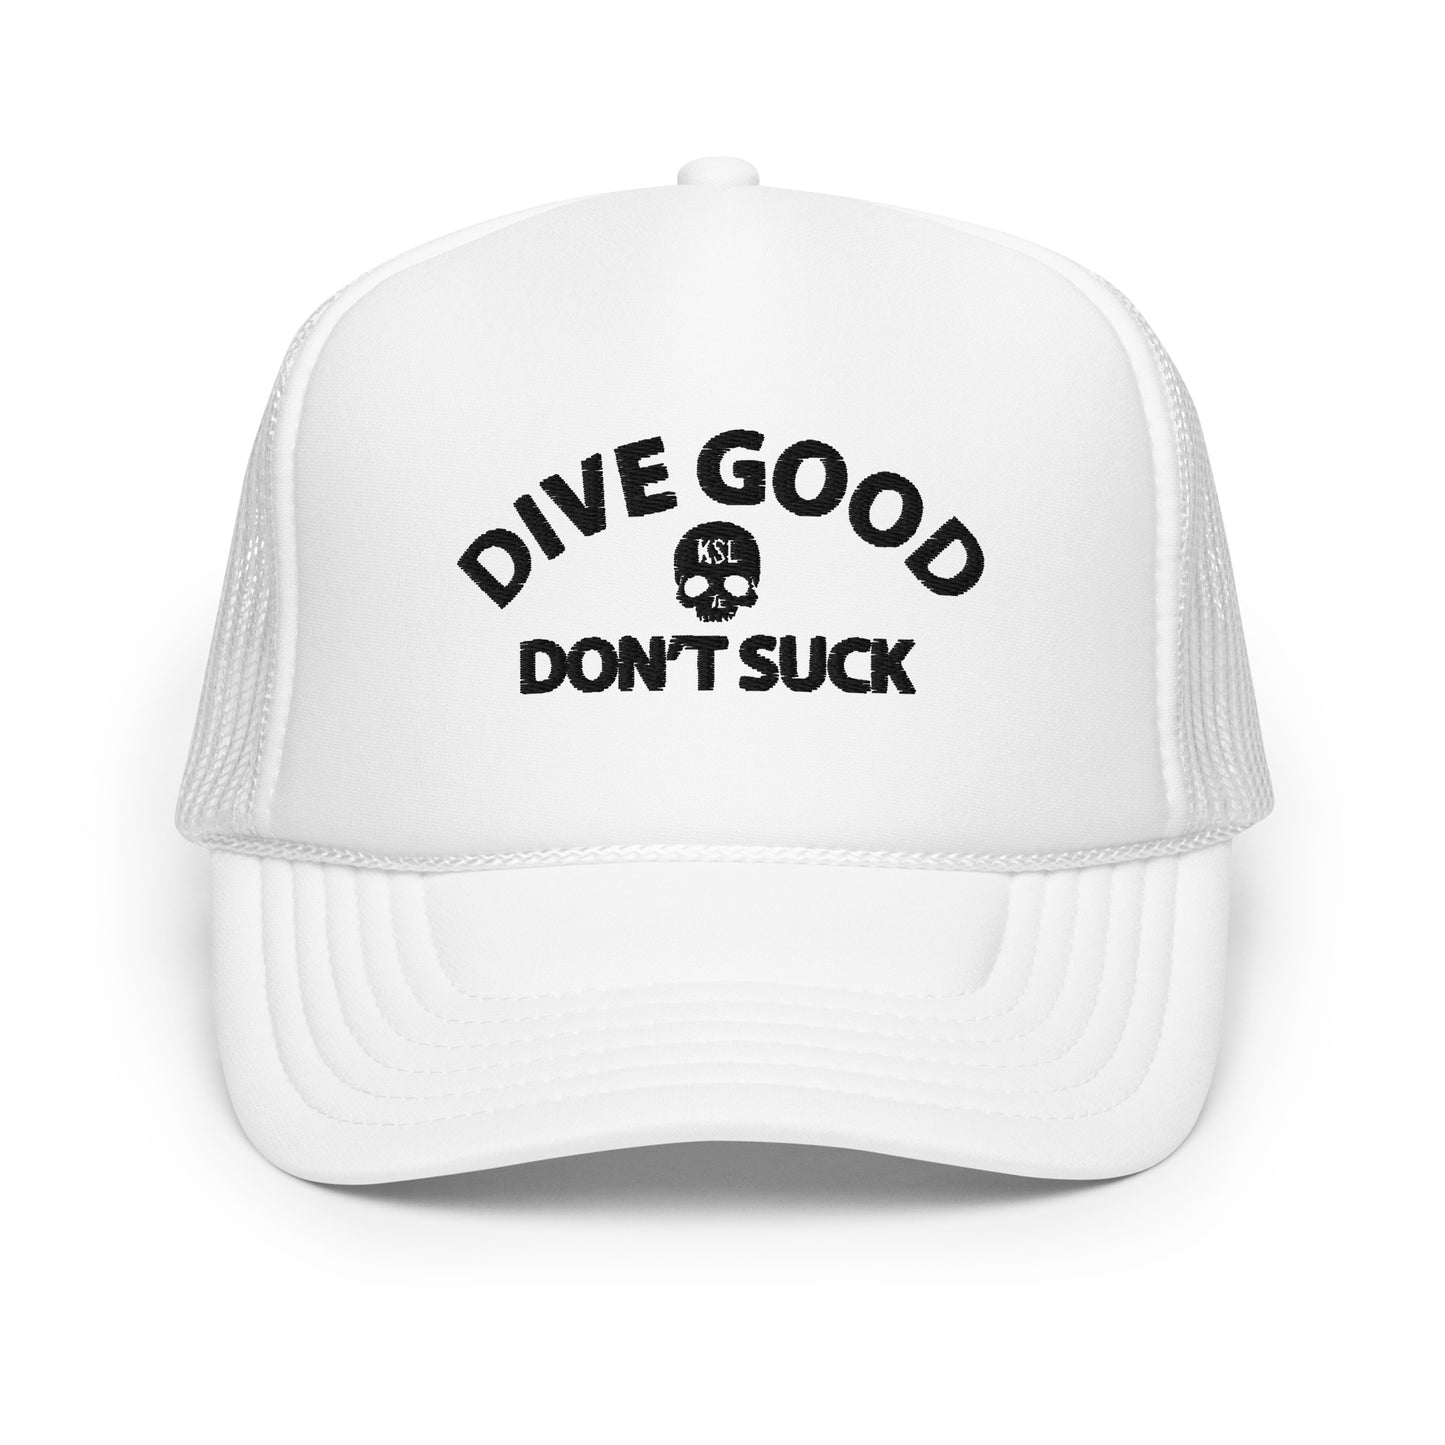 Dive Good, Don't Suck Foam Trucker Hat - Black Thread